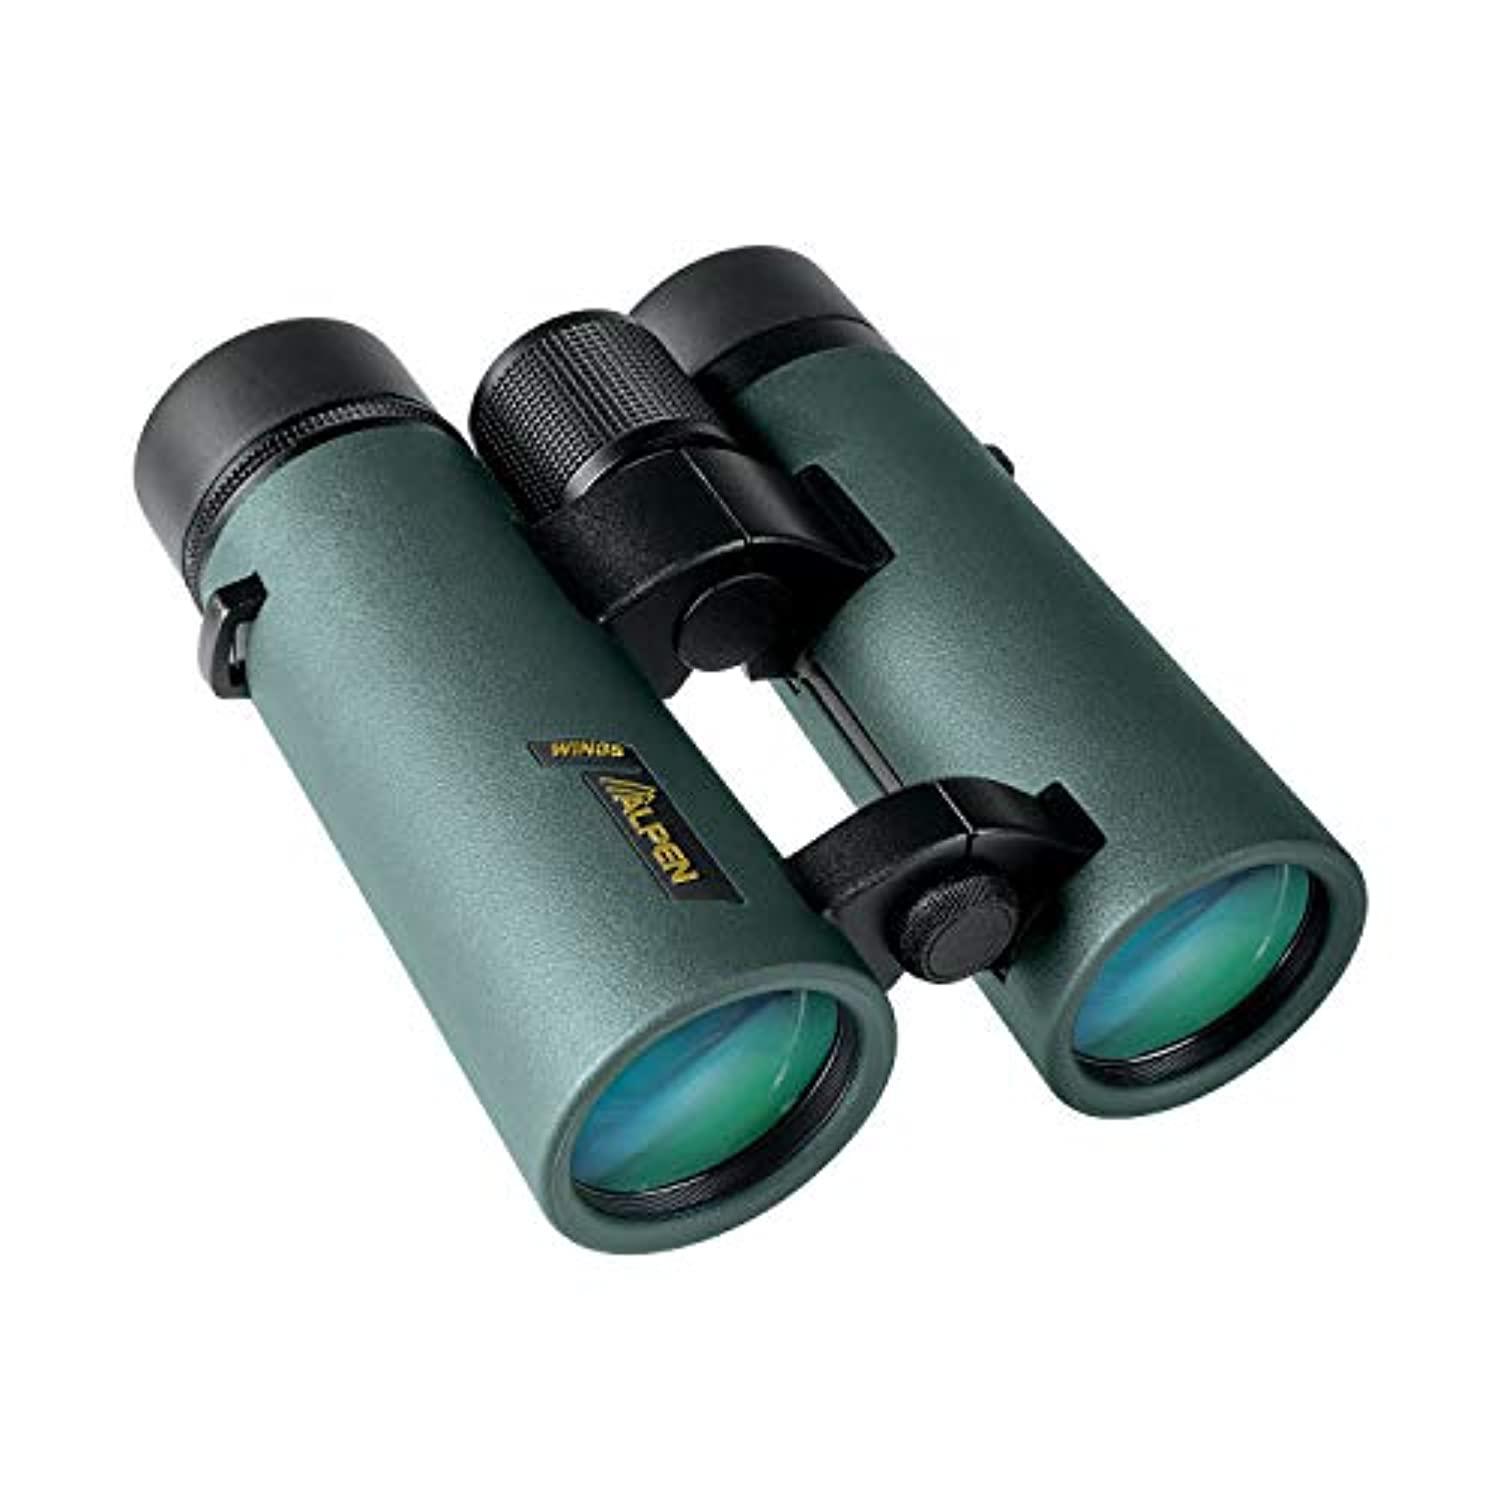 alpen wings 8x42 waterproof binoculars bak 4 optics with long eye relief and fully multi-coated optics